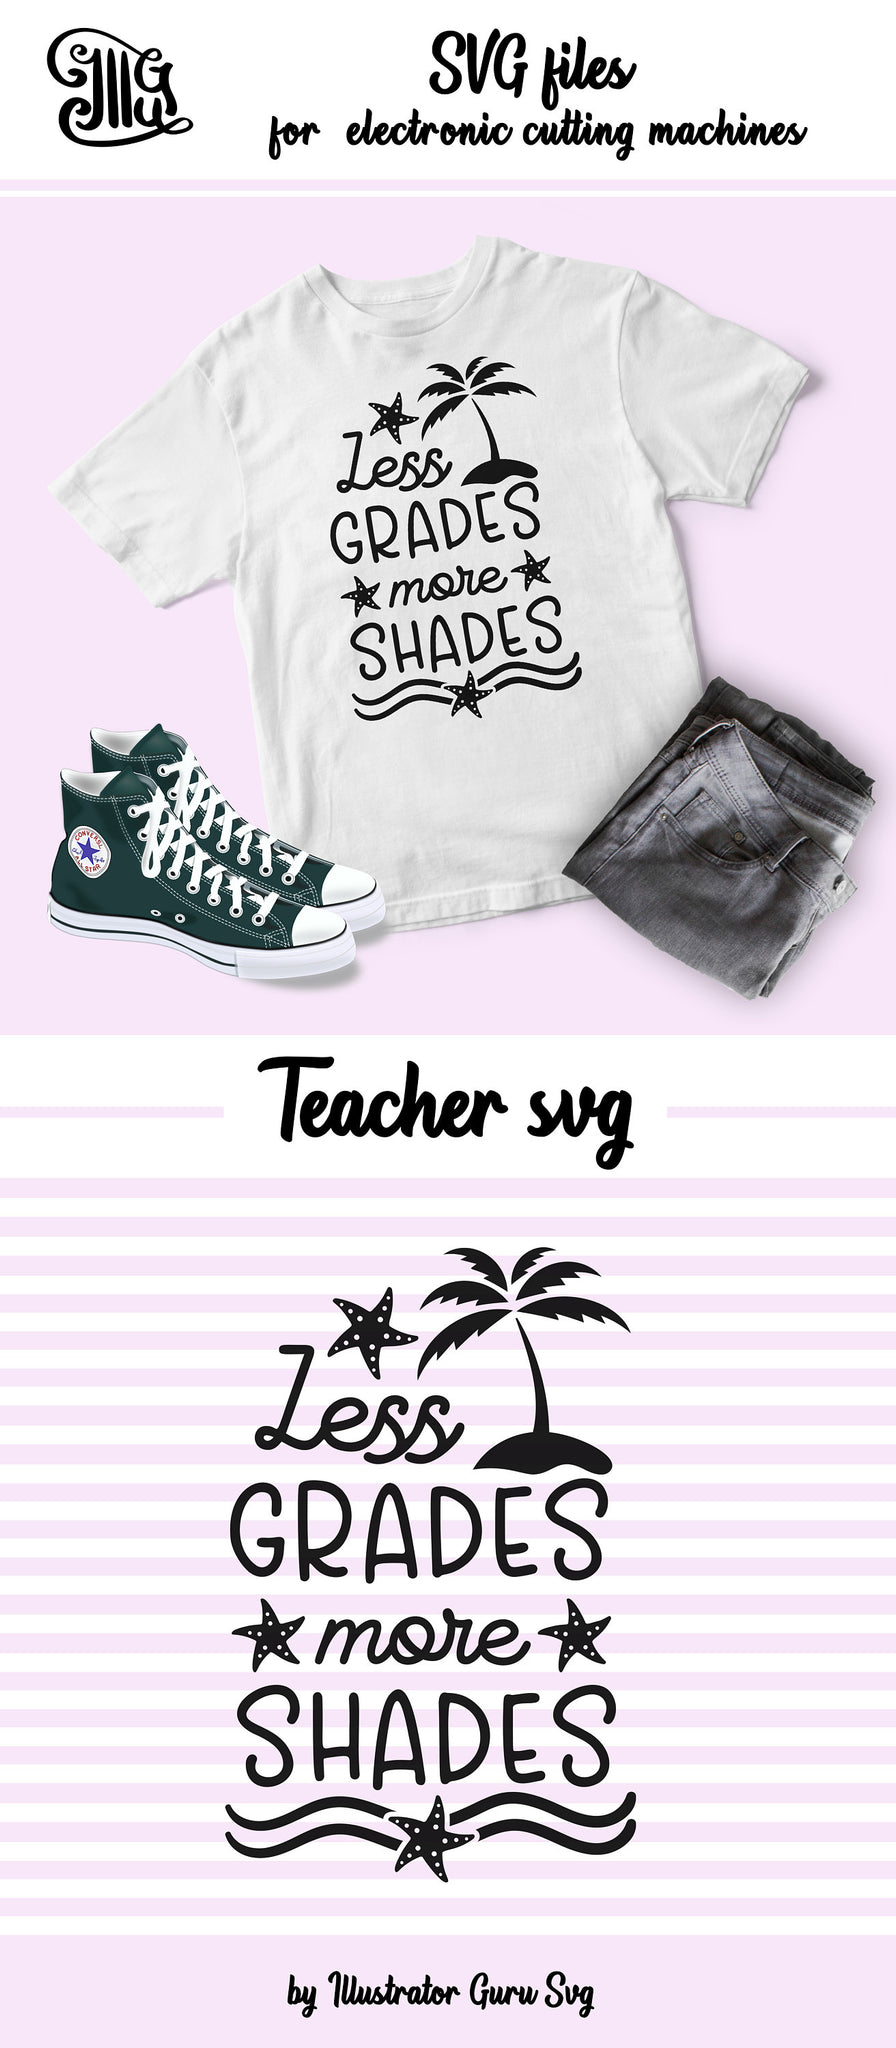 Download Less Grades More Shades Svg Teacher Vacation Svg Funny Teacher Svg Illustrator Guru